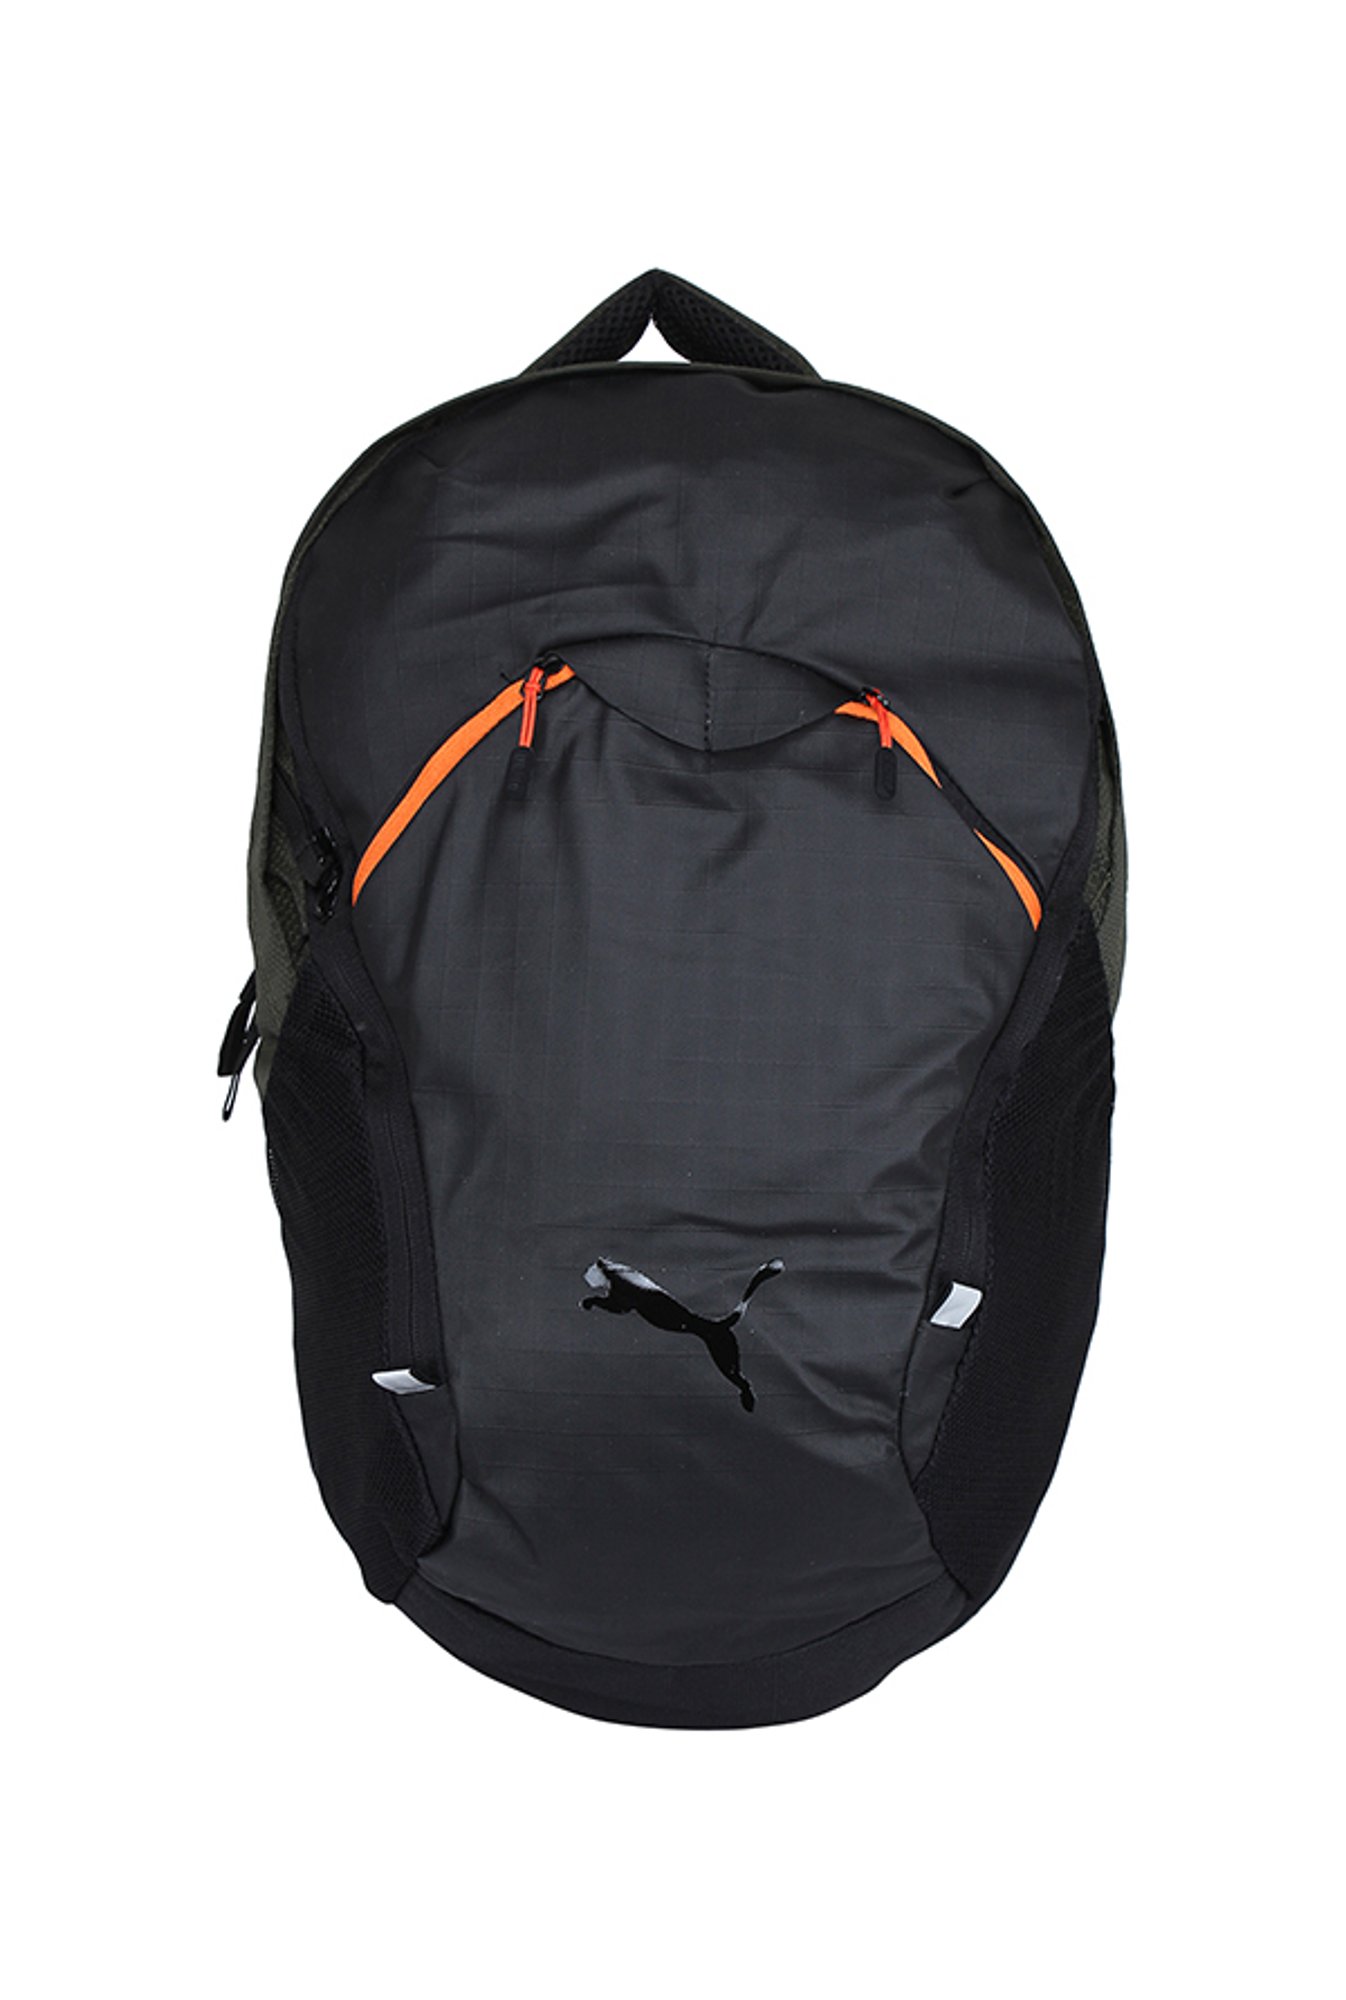 puma ultimate pro backpack